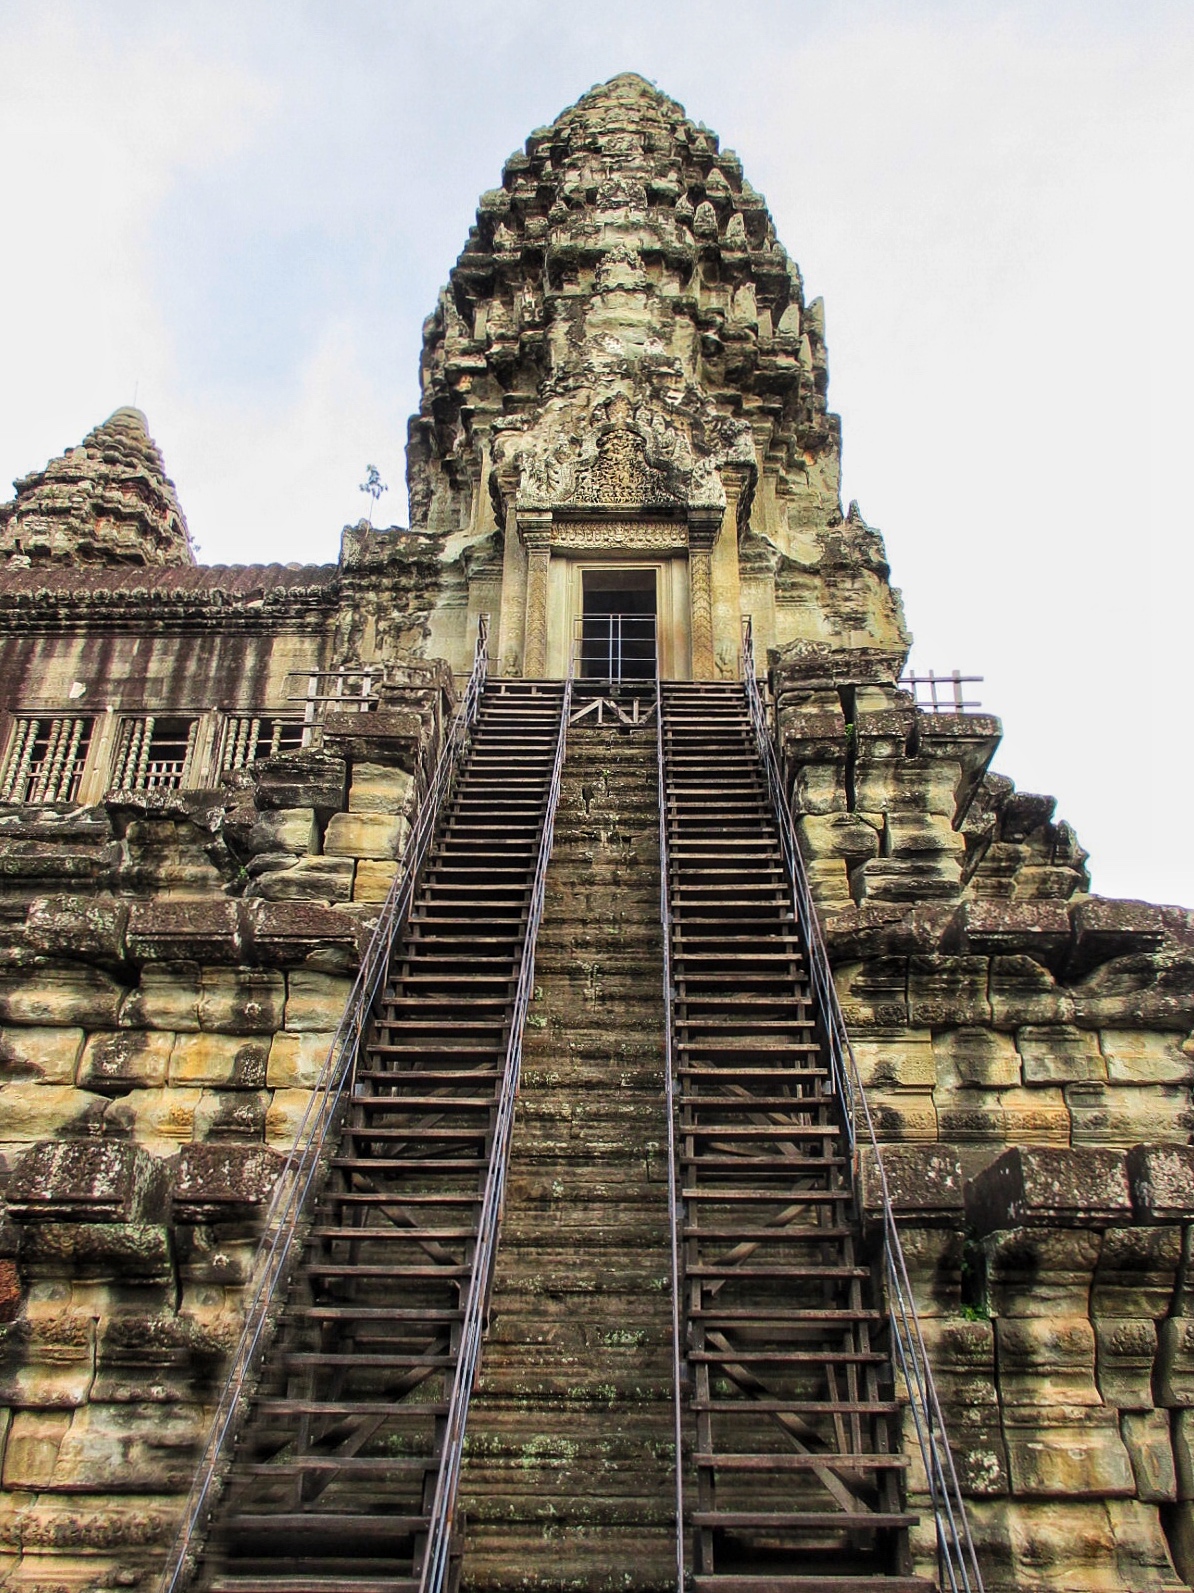 The central tower of Angkor Wat symbolizes Mount Meru